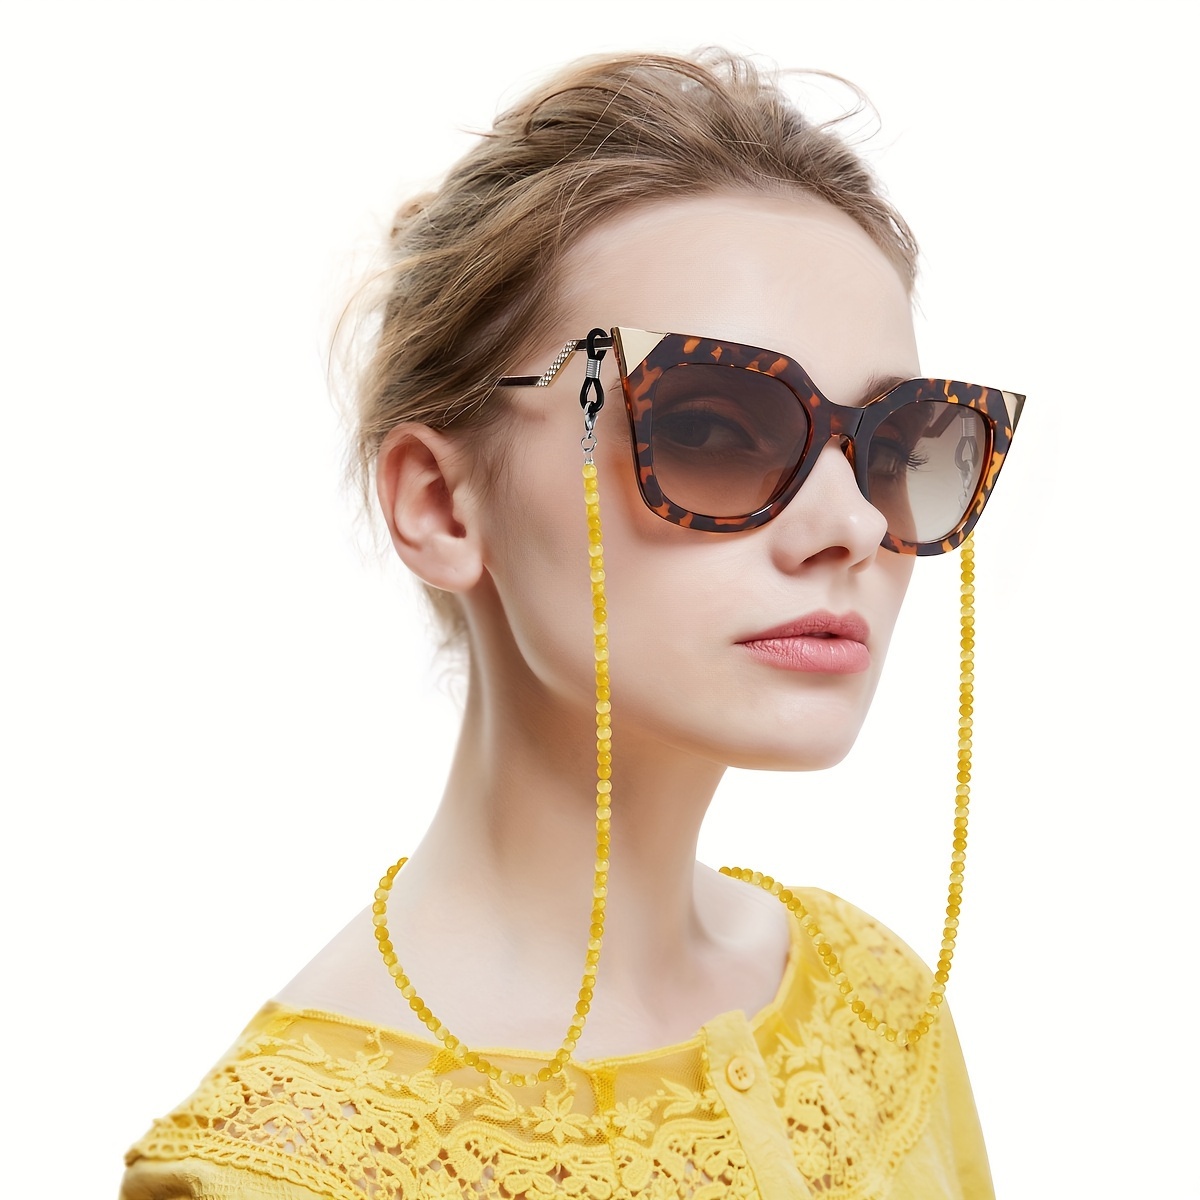 Acrylic Glasses Chain Anti Slip Sunglasses Reading Glasses Lanyard